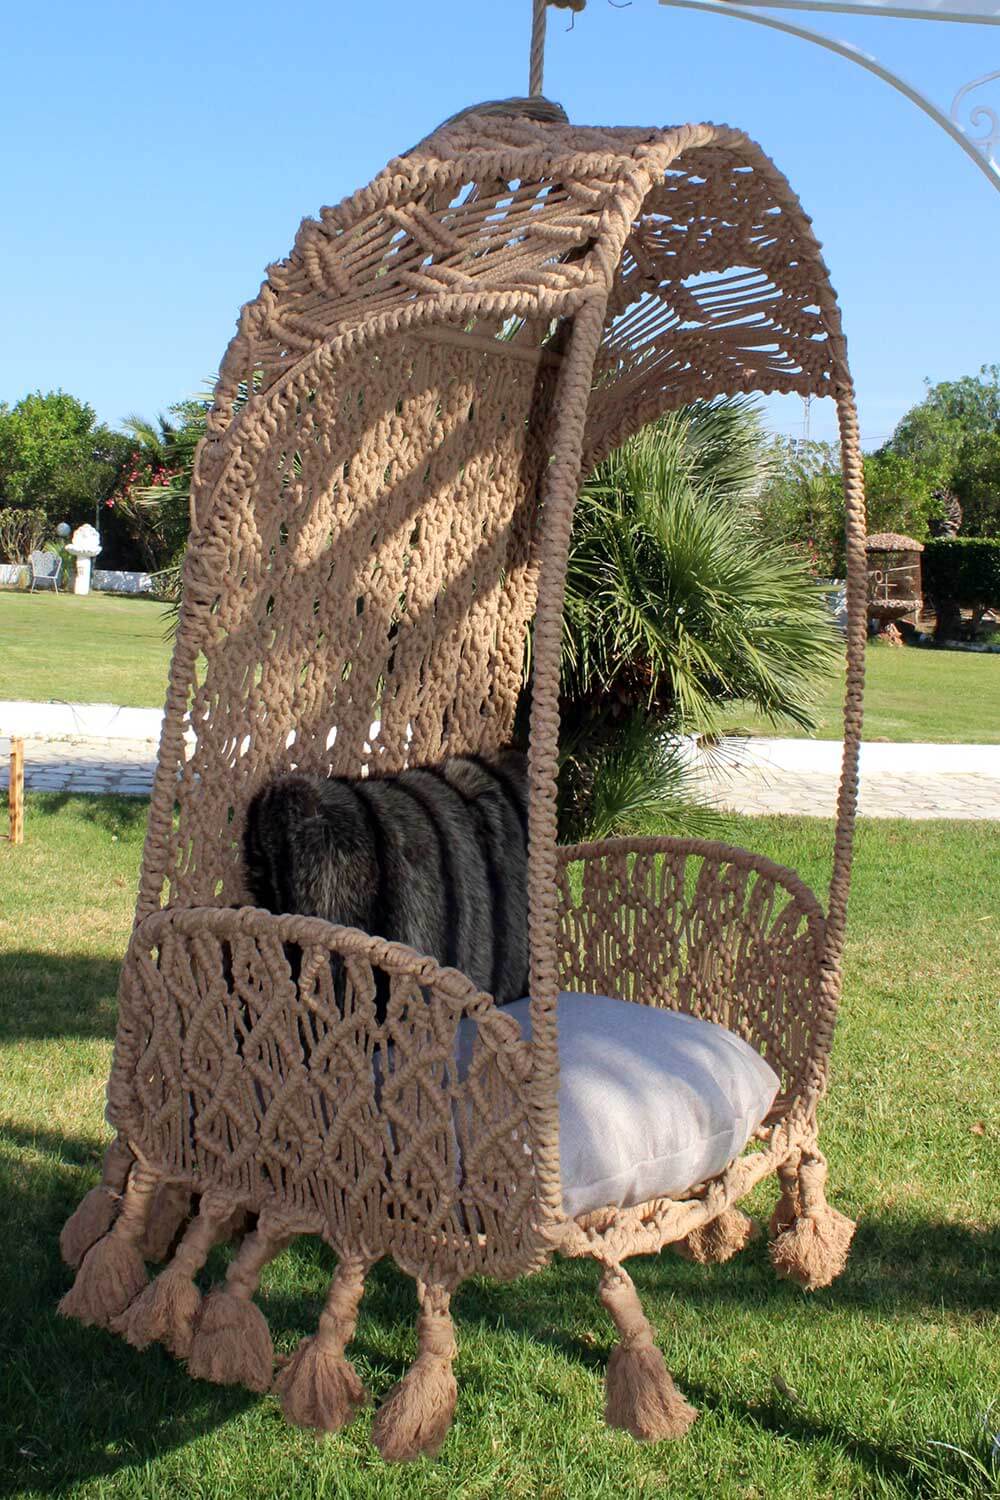 swing-hammock-chair